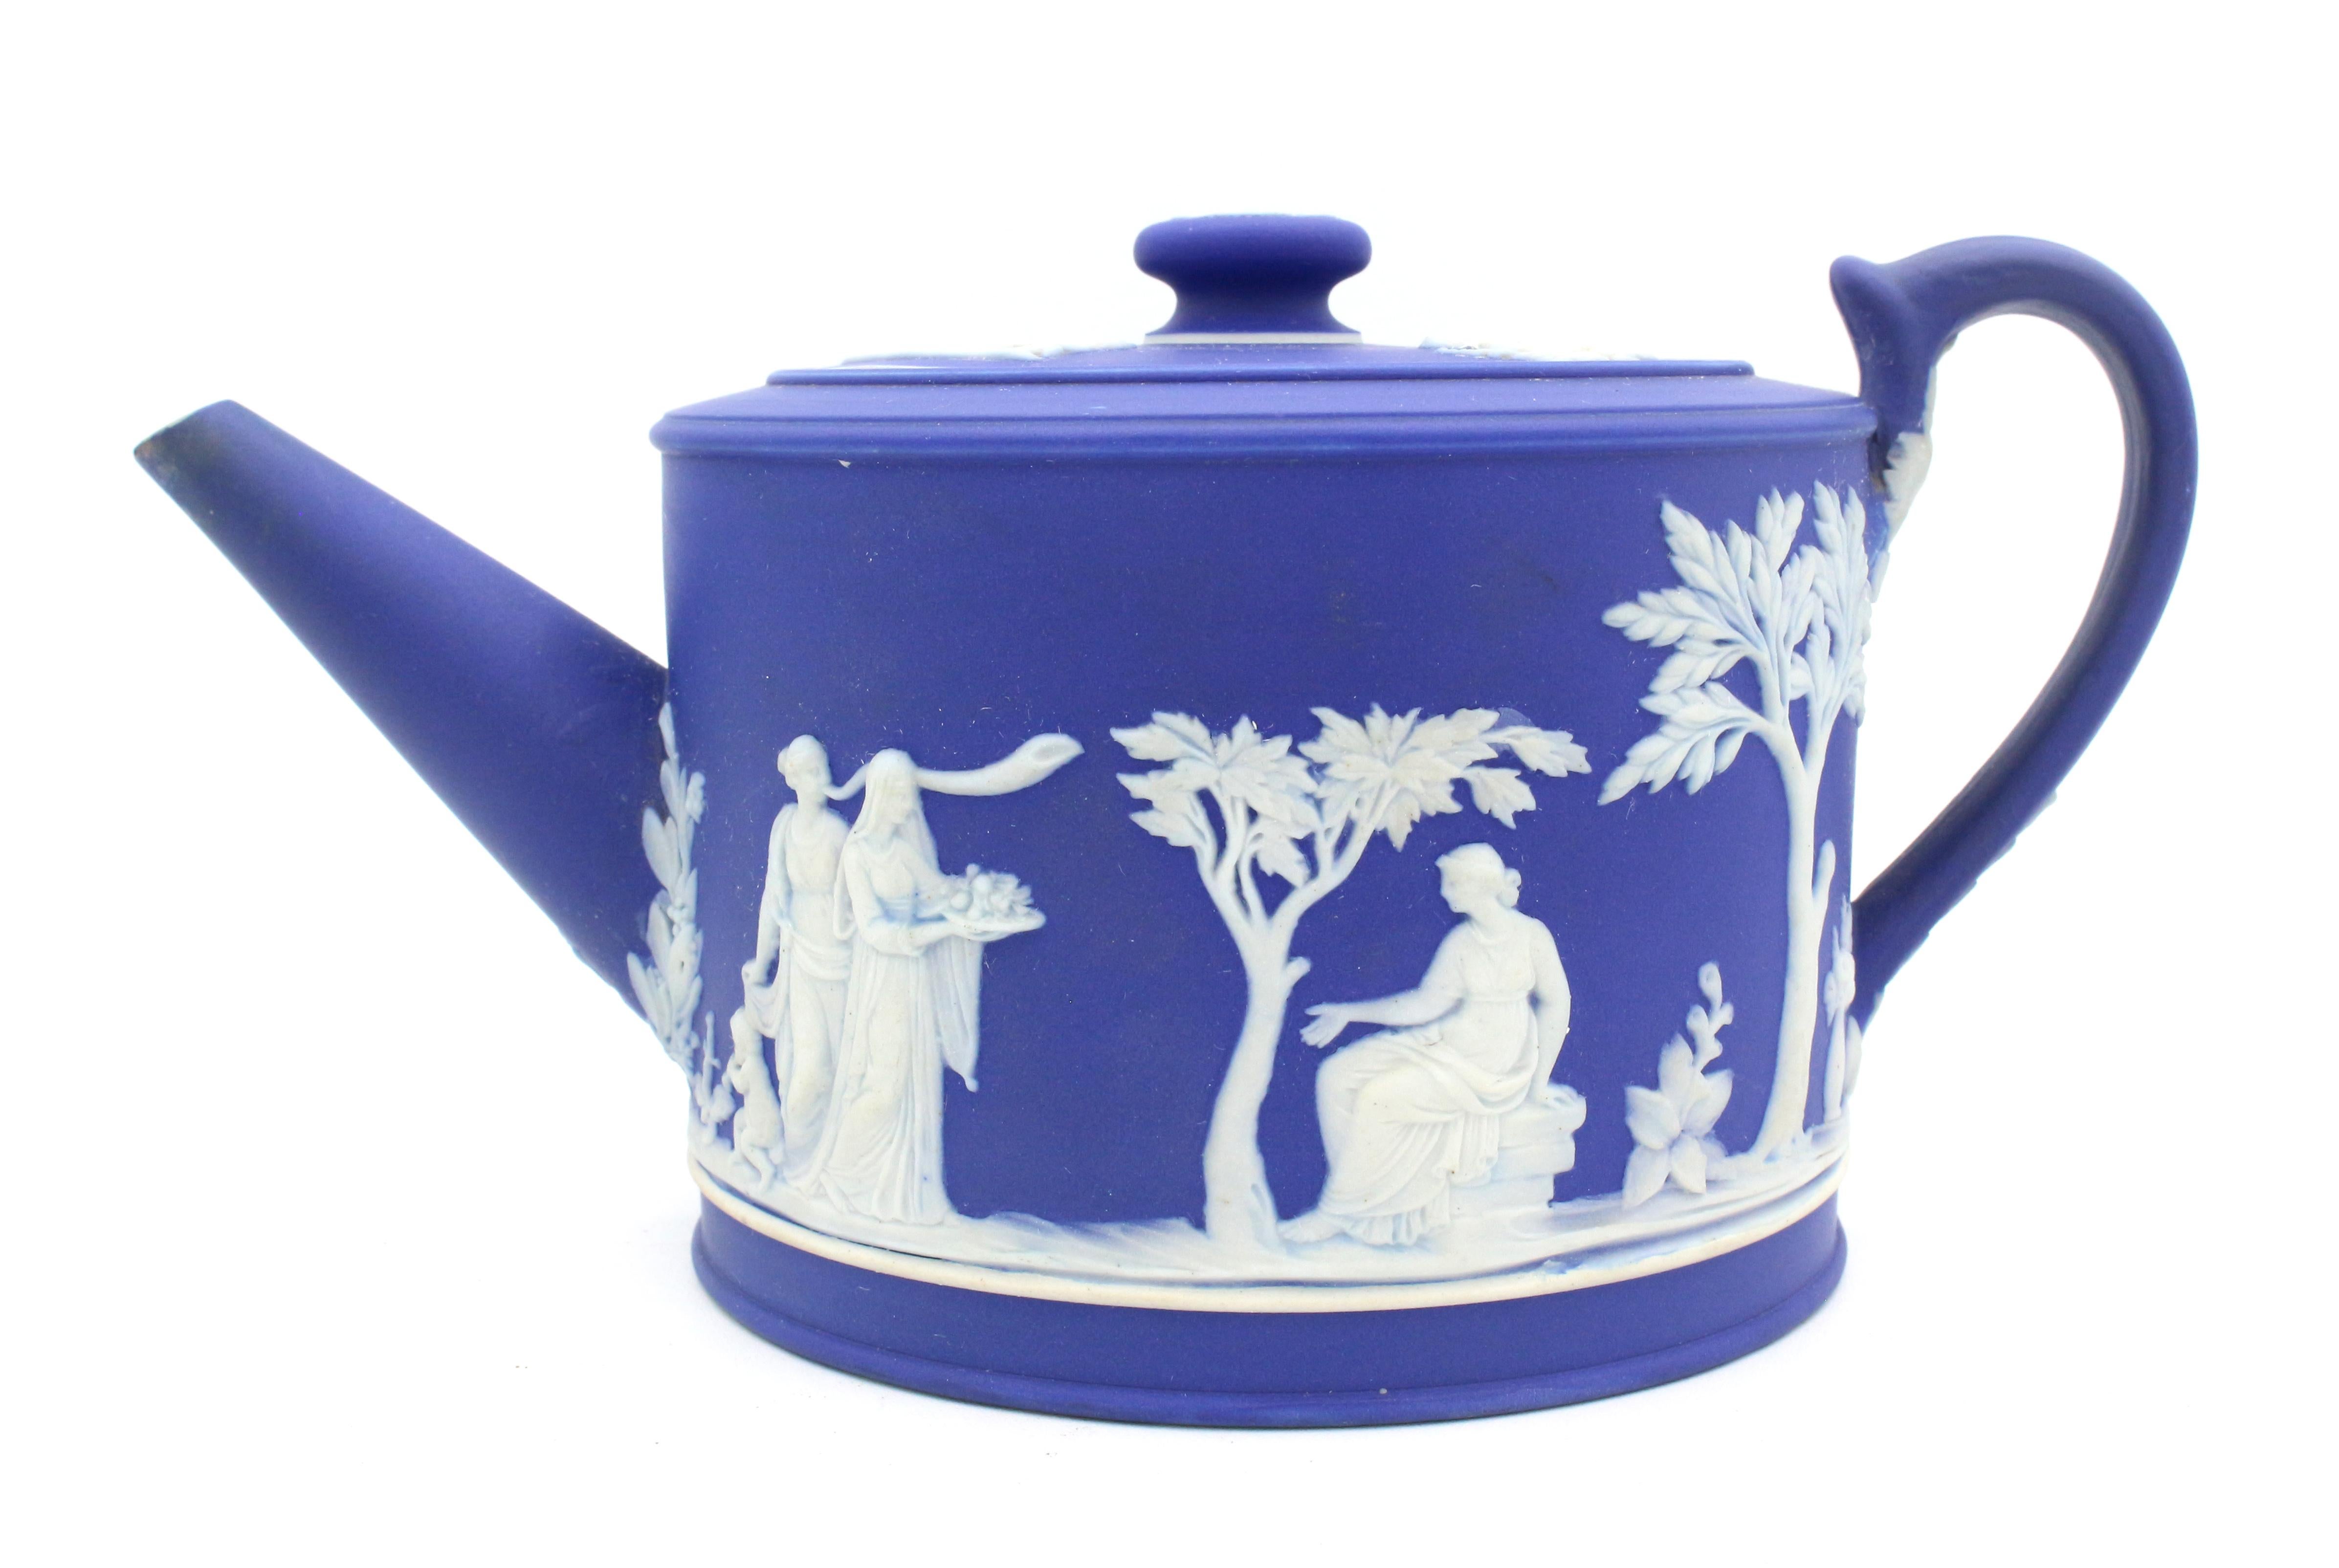 Circa 1780-1820 Wedgwood dark blue Jasperware teapot. Elegantly adorned with Greco-Roman scenes. Impressed Wedgwood. Provenance: Tudor House Galleries, Charlotte, NC, 1/21/90. Spout tip - old repair.
7.75